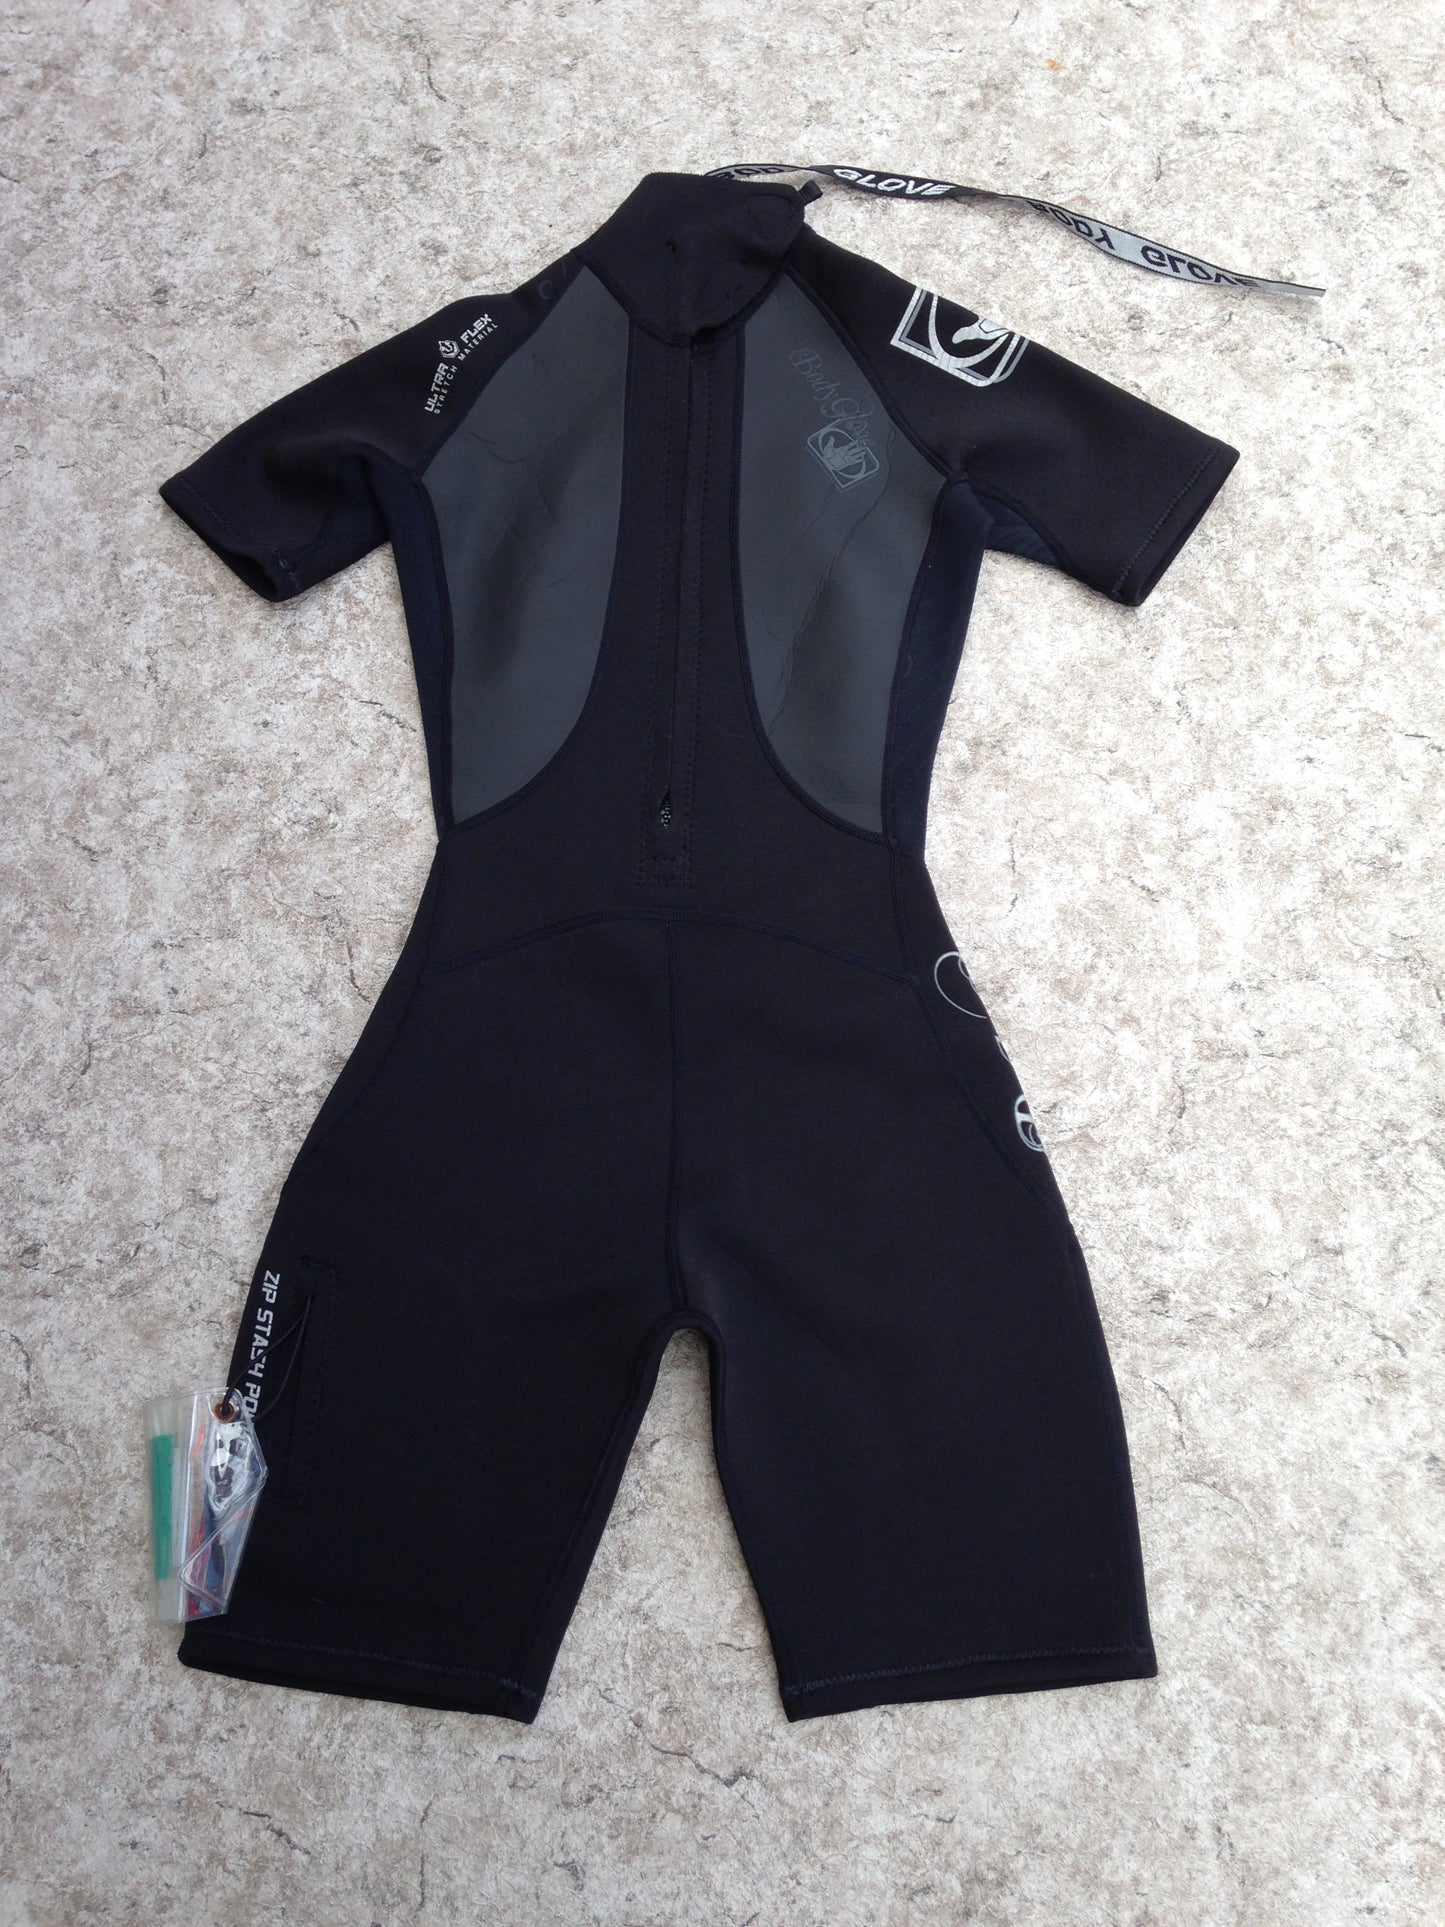 Wetsuit Ladies Size 5-6 Body Glove Neoprene 2-3mm Black Grey